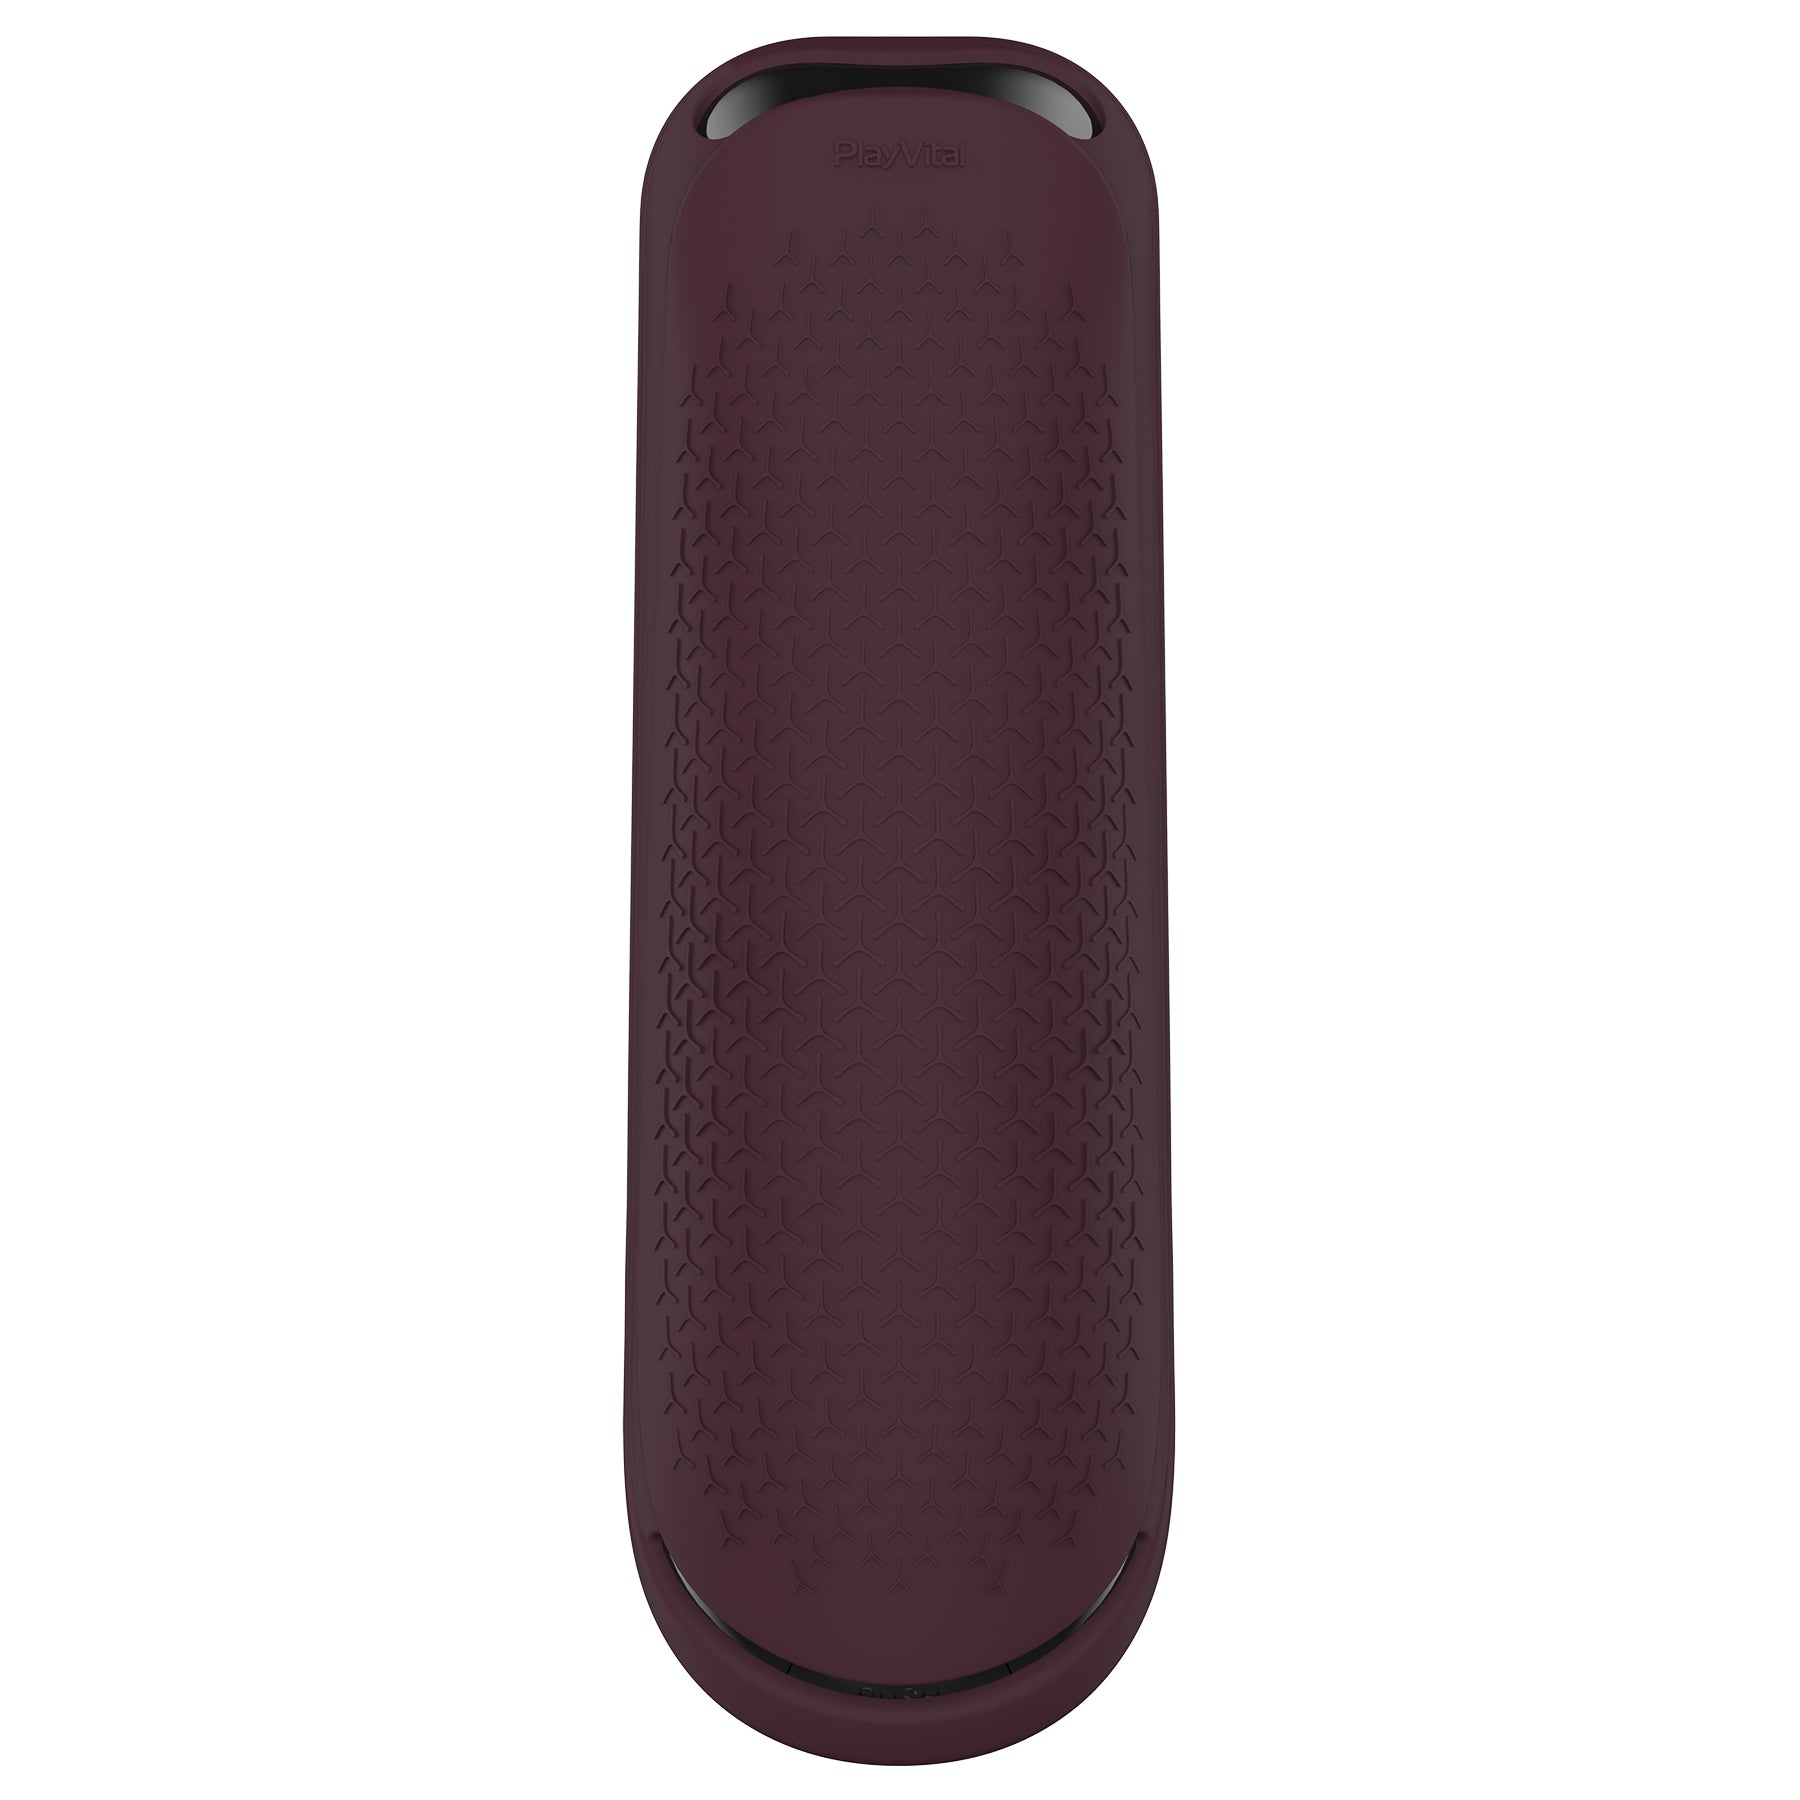 PlayVital Wine Red Silicone Protective Remote Case for PS5 Media Remote Cover, Ergonomic Design Full Body Protector Skin for PS5 Remote Control - PFPJ079 PlayVital